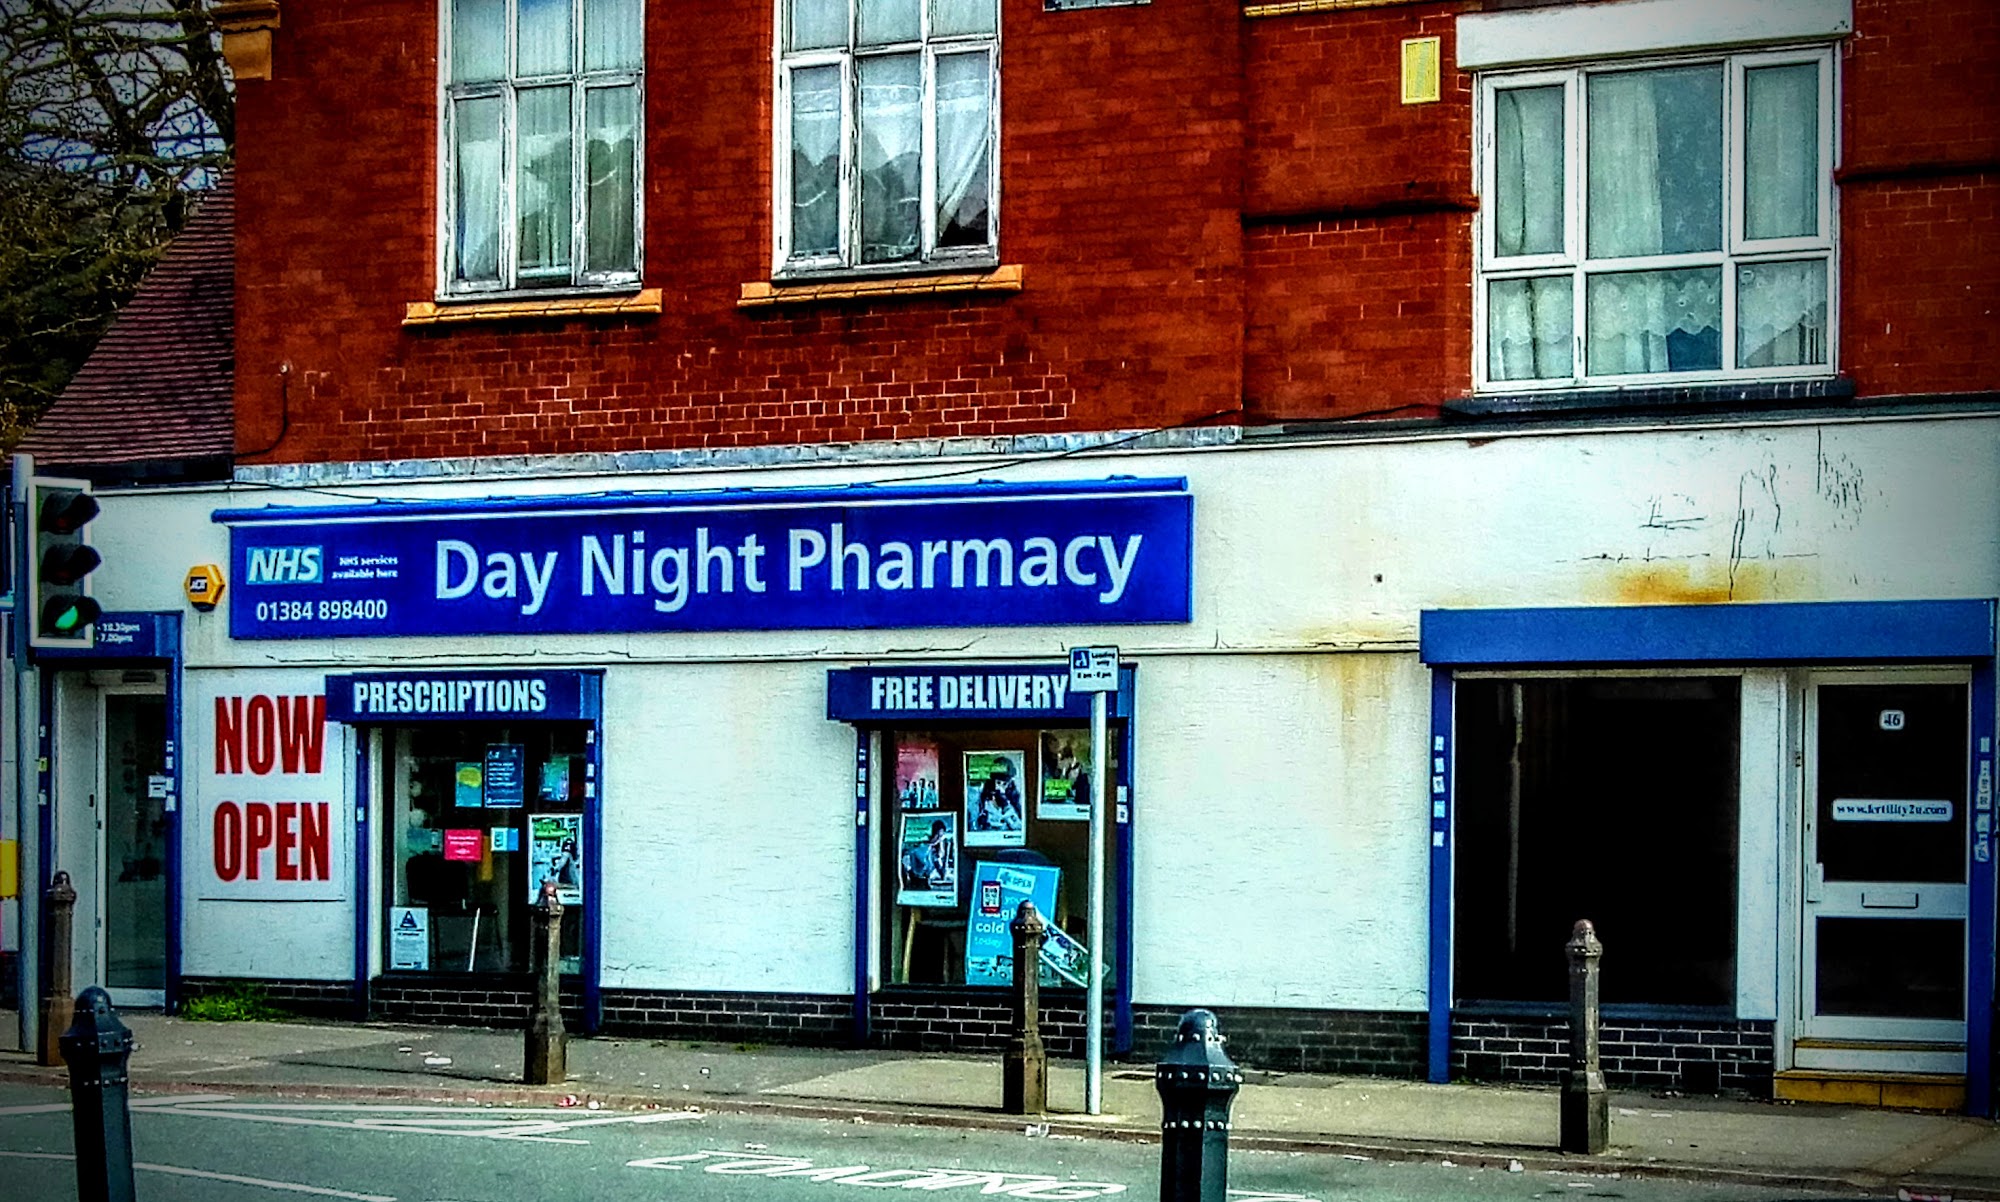 Daynight Pharmacy